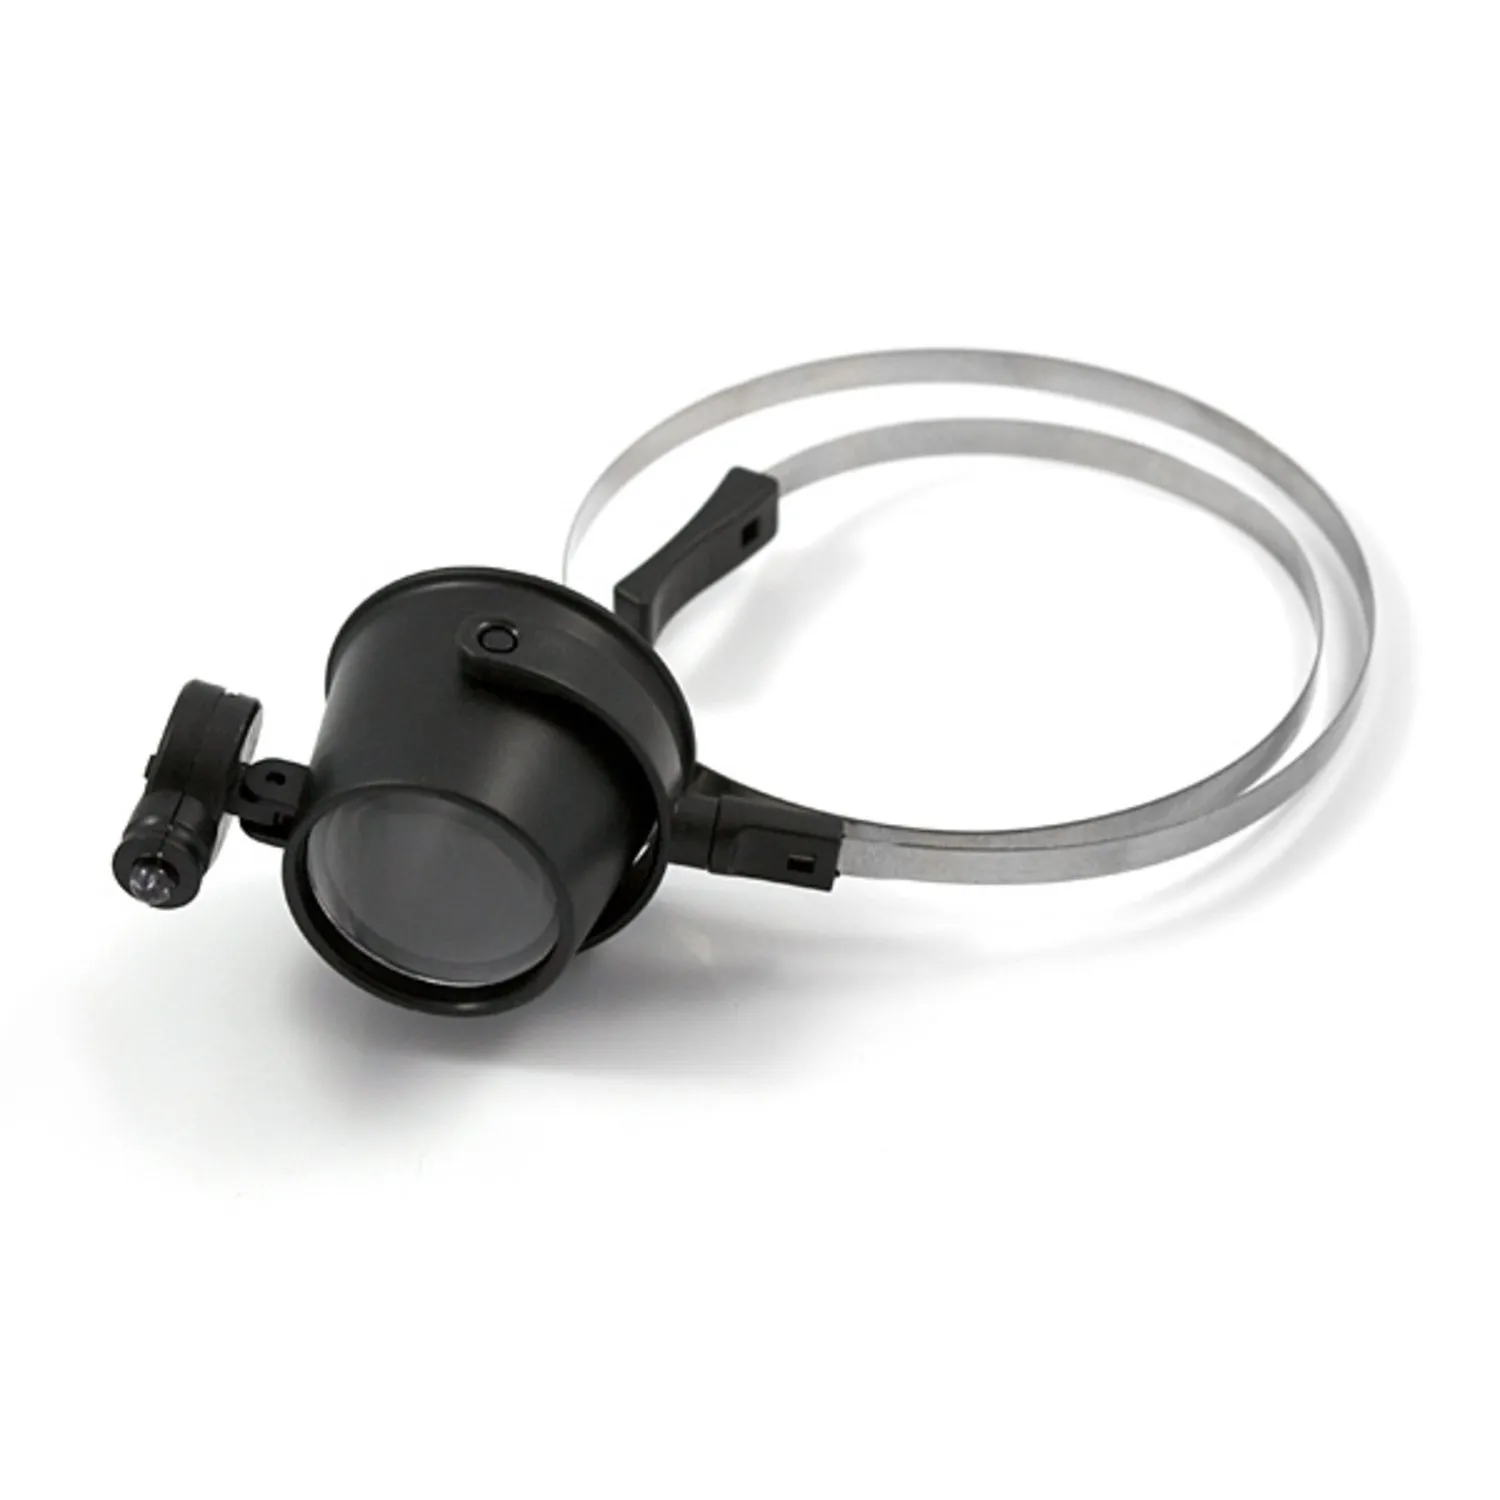 Photo of Monocle Magnifier - Illuminated